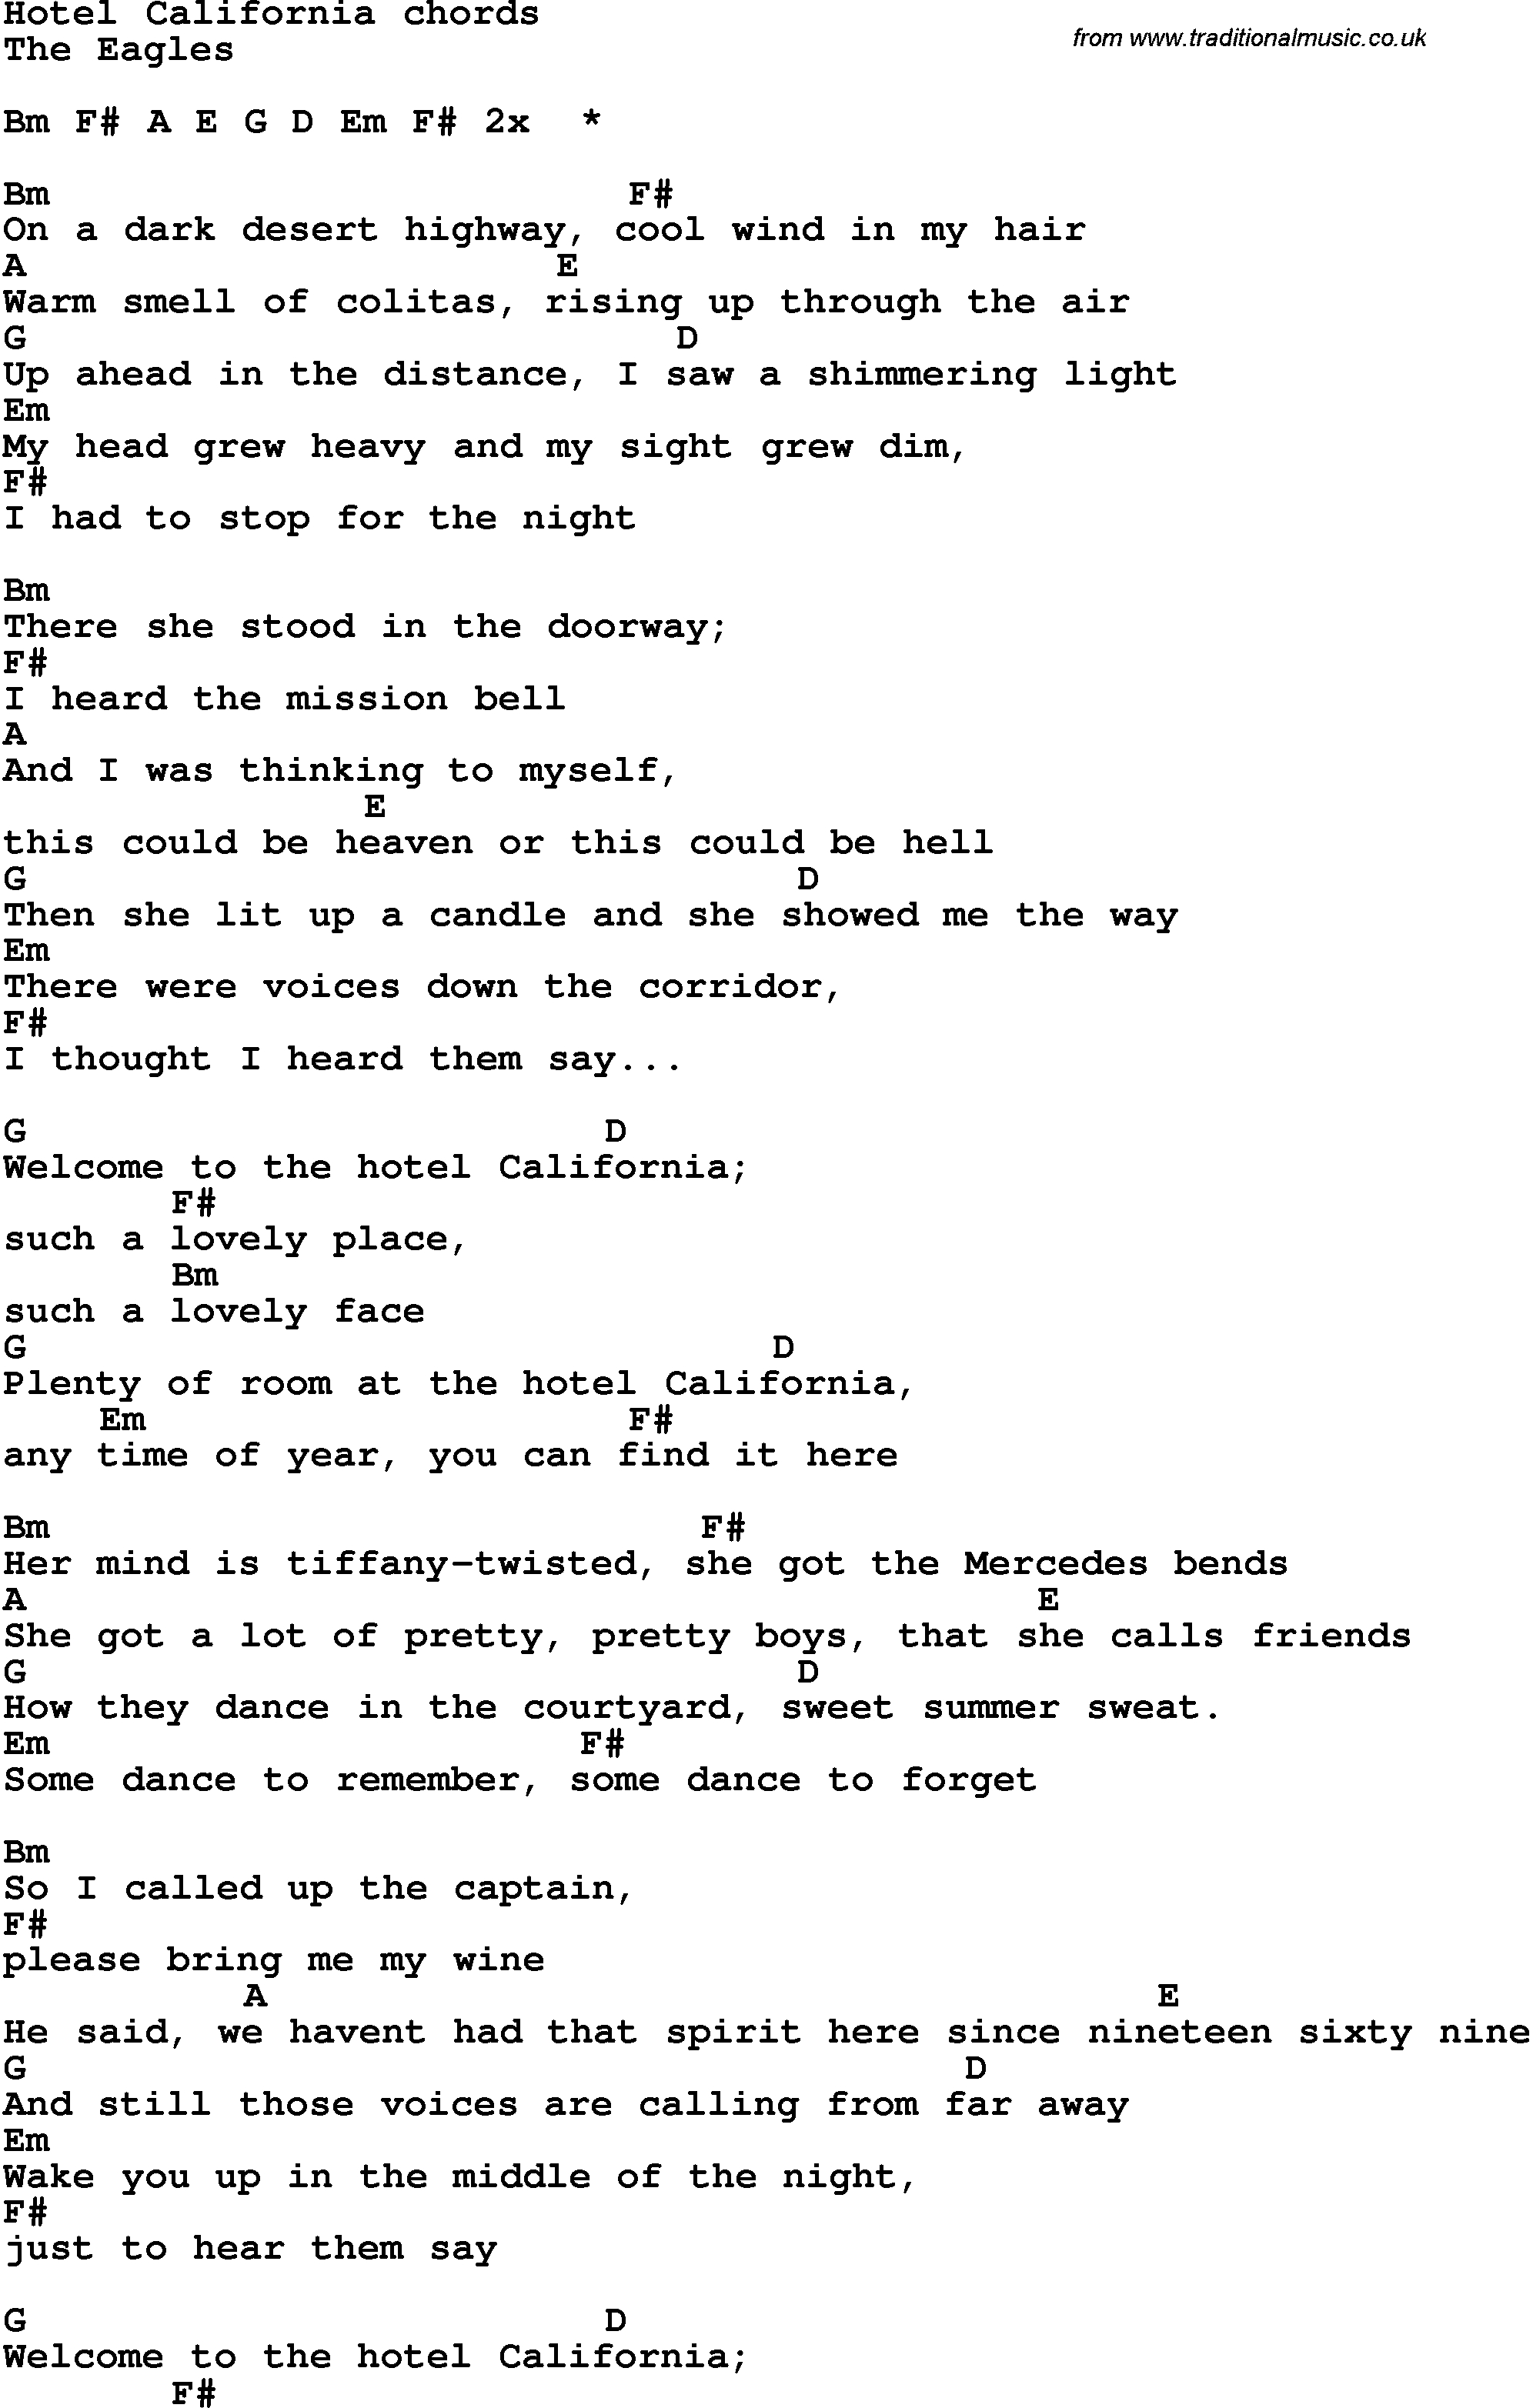 Hotel California Chords Song Lyrics With Guitar Chords For Hotel California